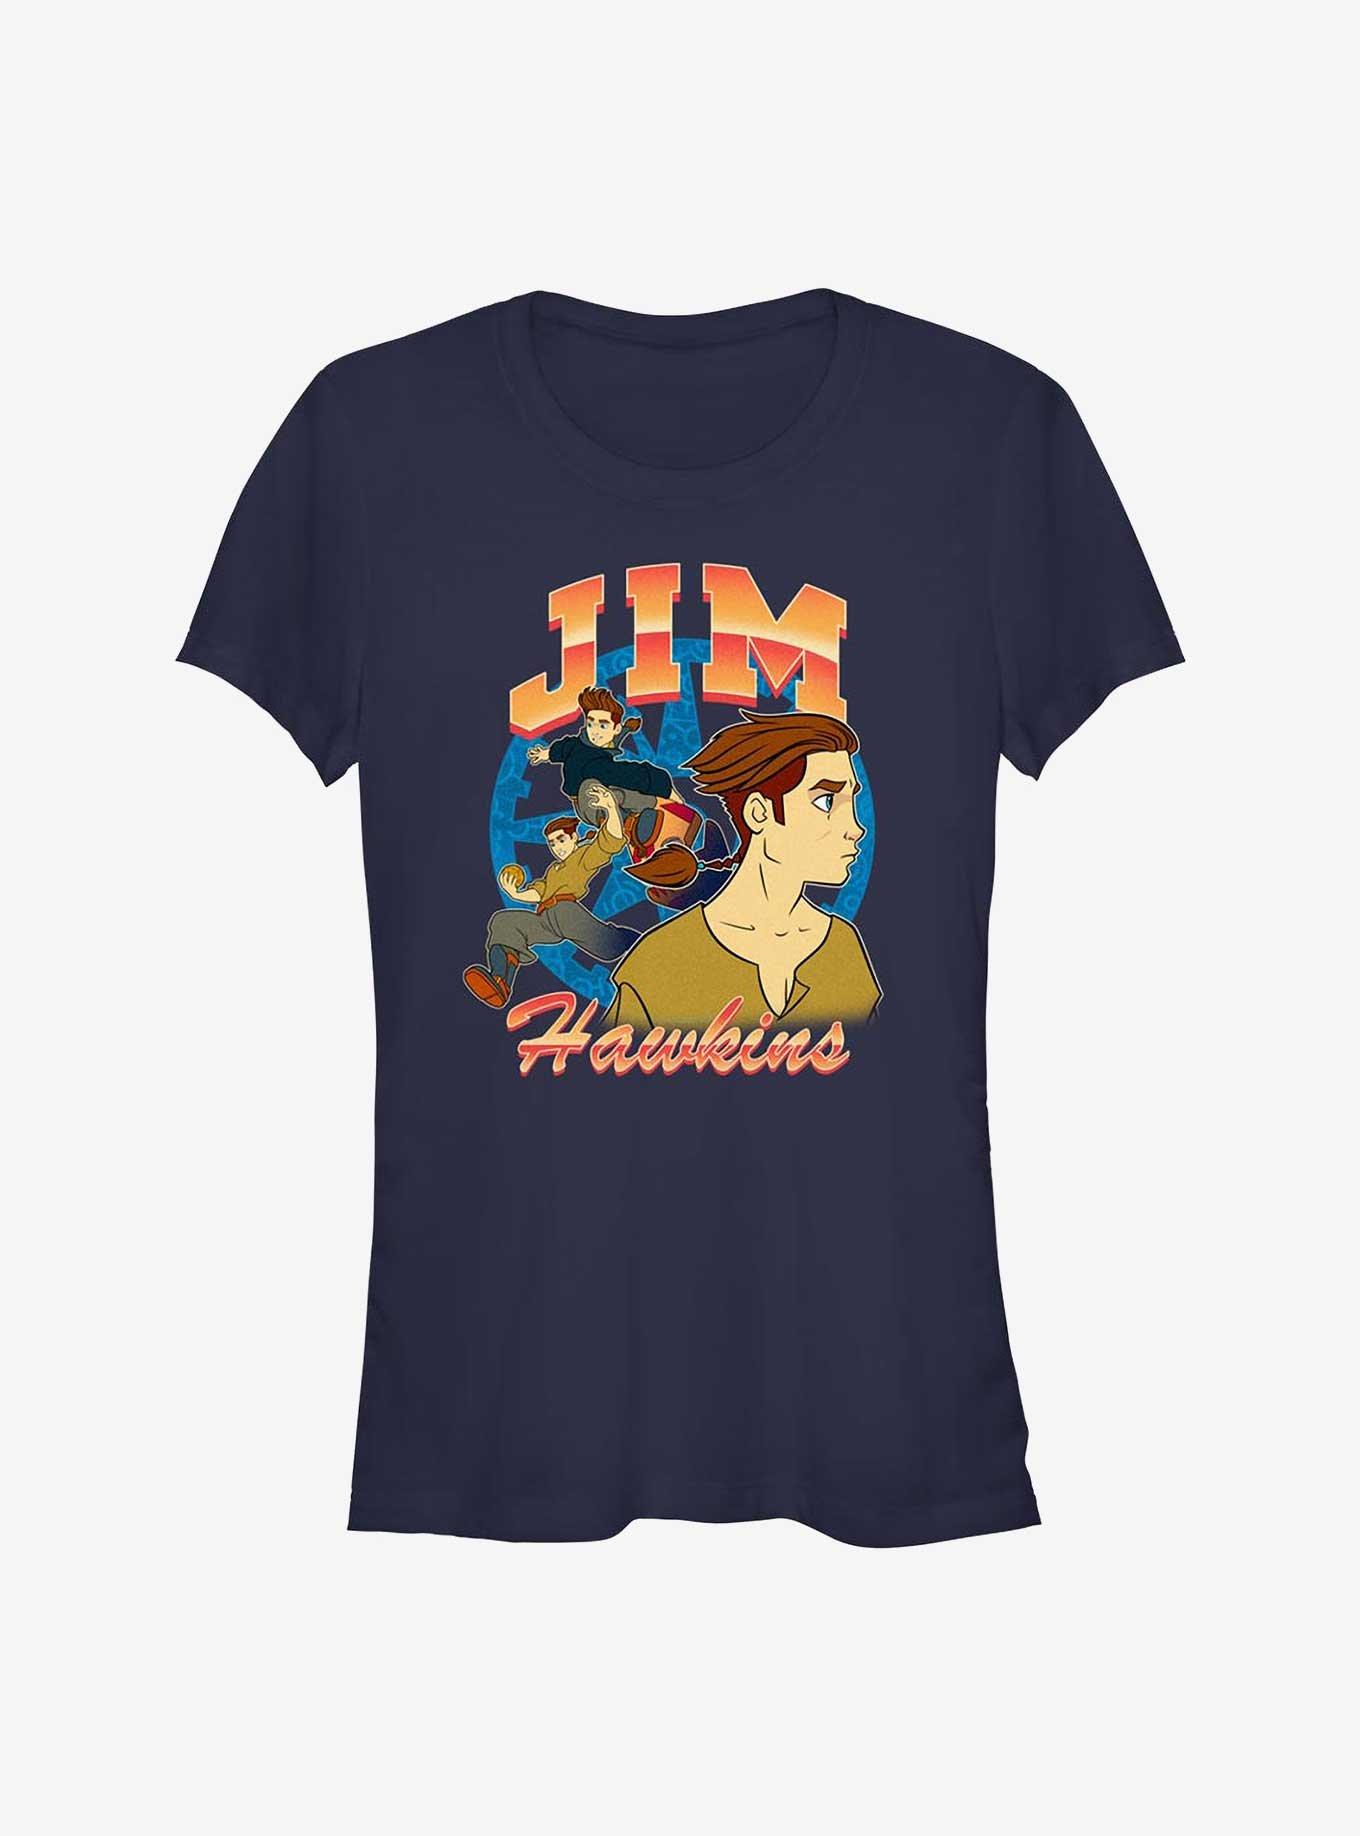 Disney Treasure Planet Jim Hawkins Girls T-Shirt